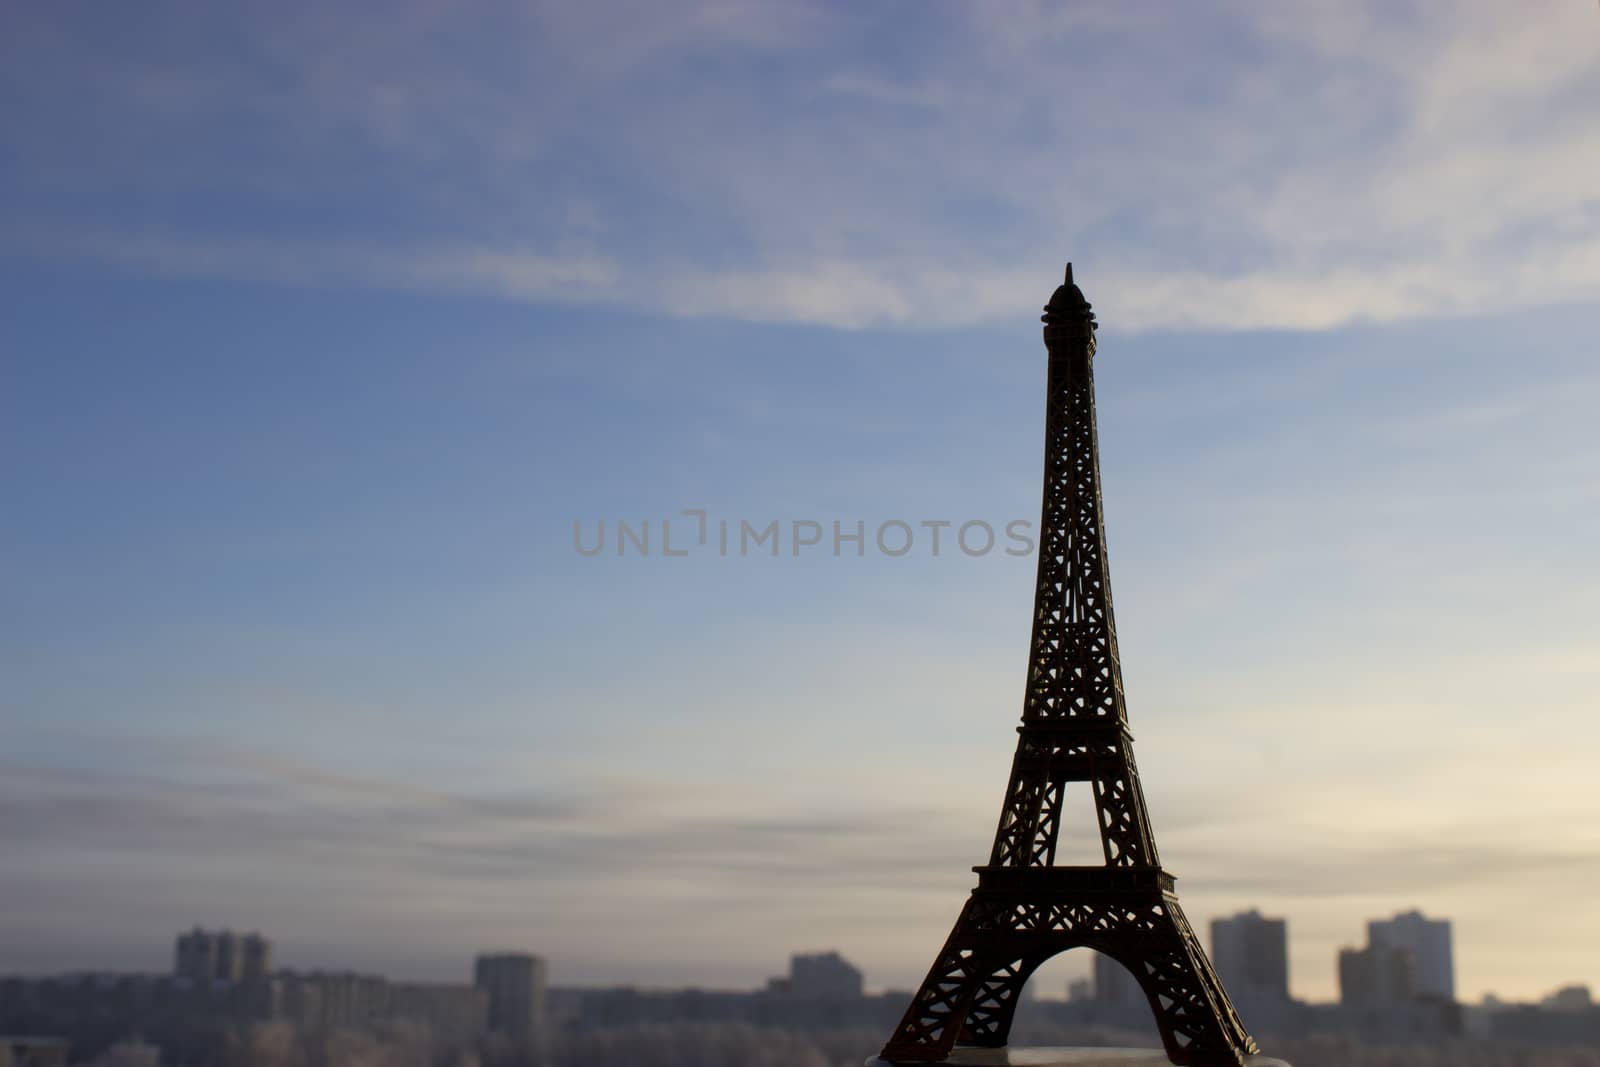 miniature of Tour Eiffel in Paris, winter